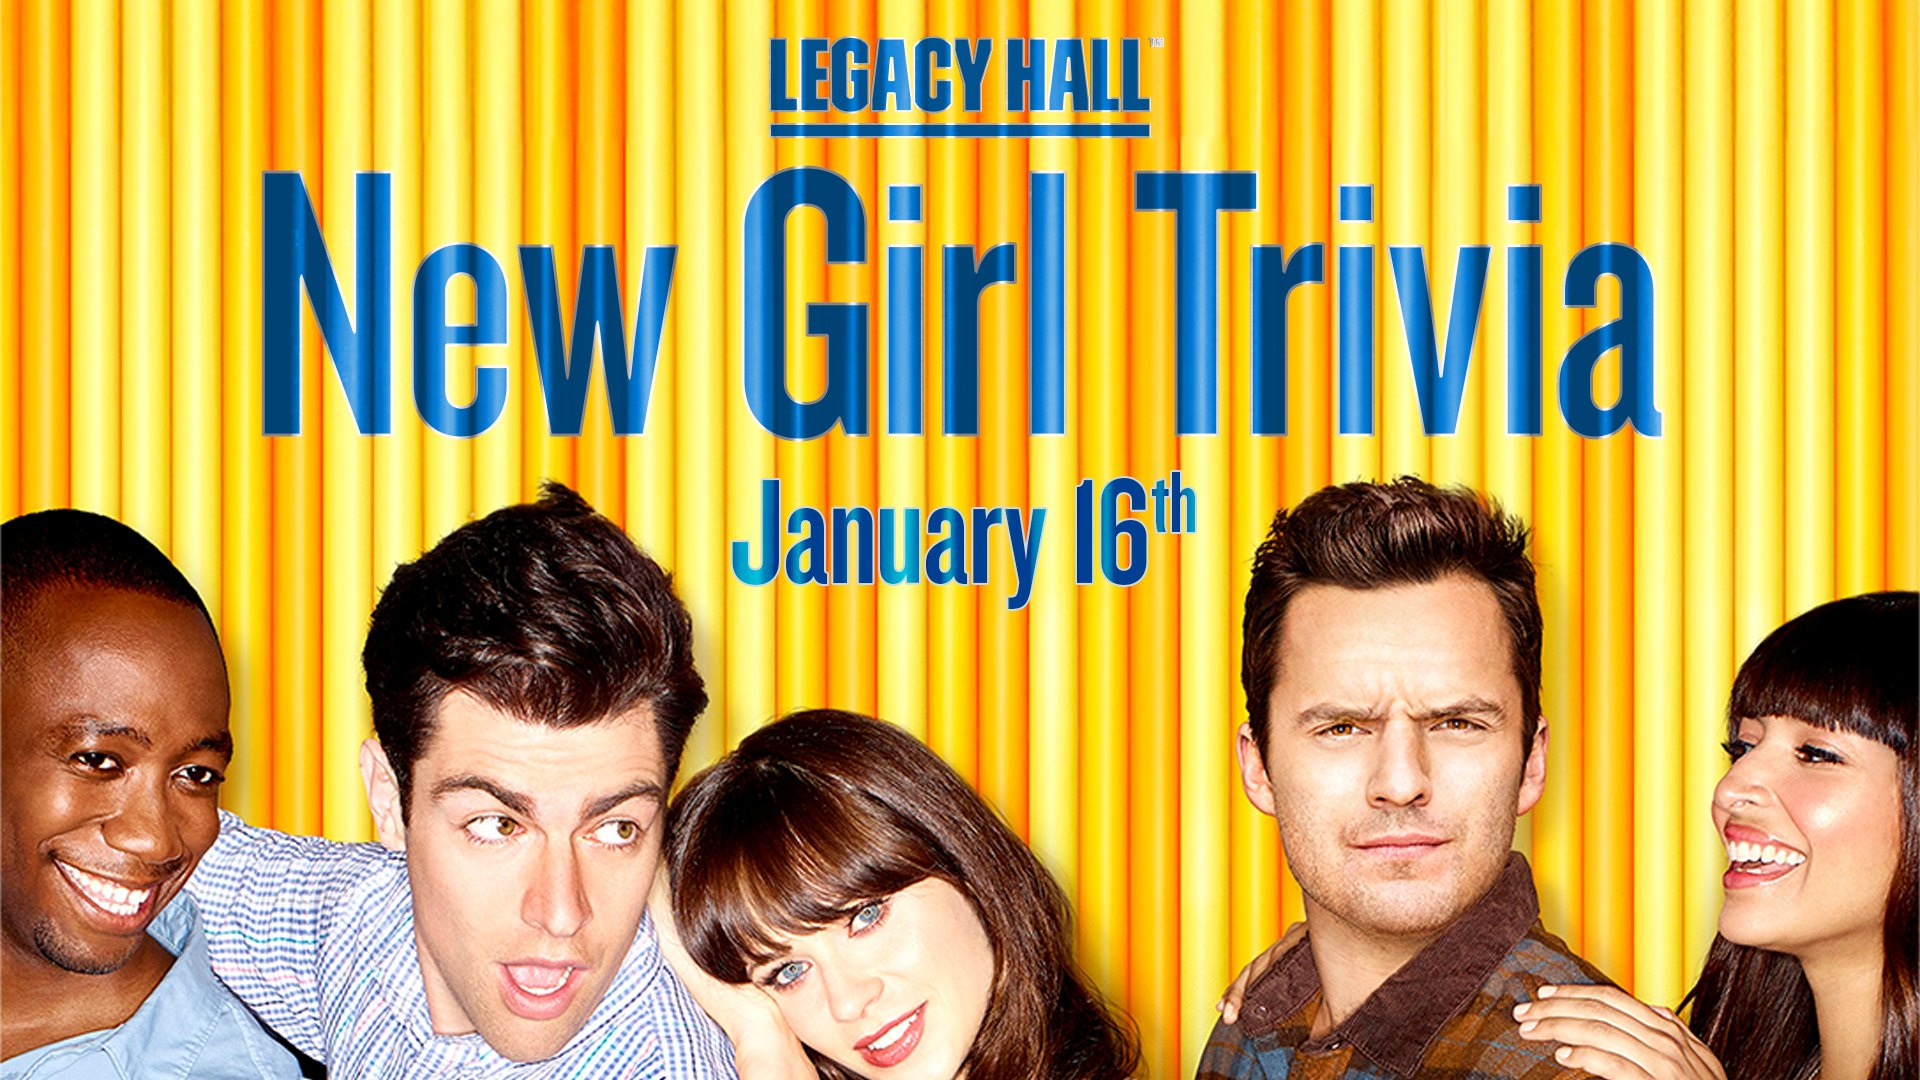 New Girl Trivia at Legacy Hall!